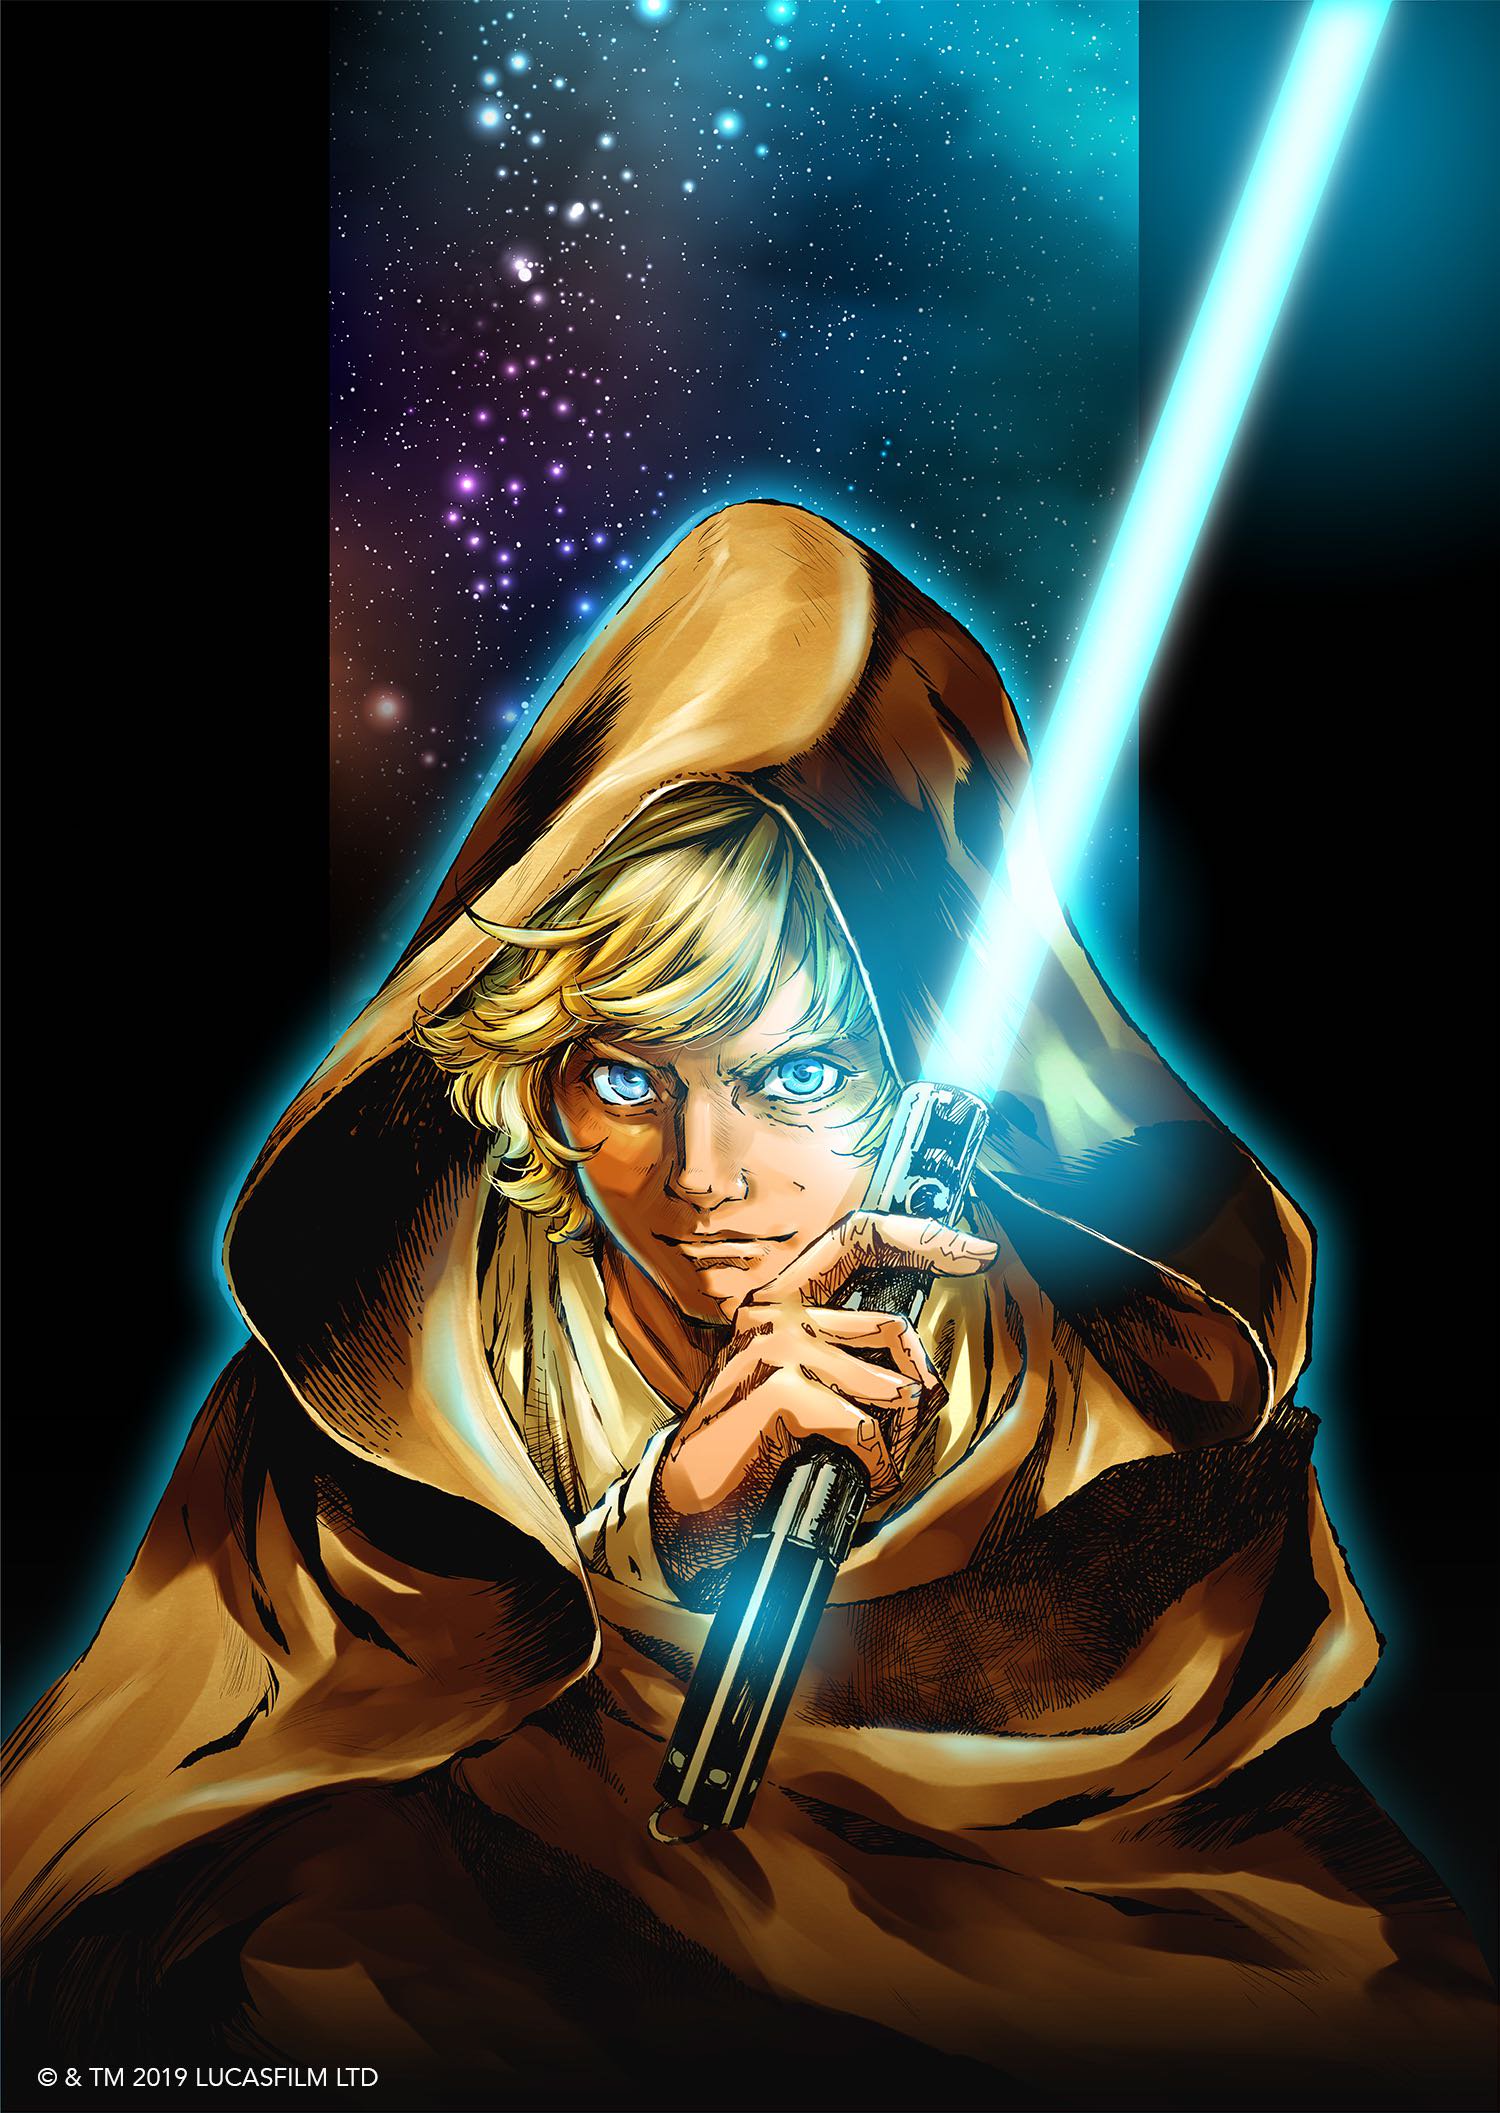 Plik:The Legends of Luke Skywalker coverart.jpg